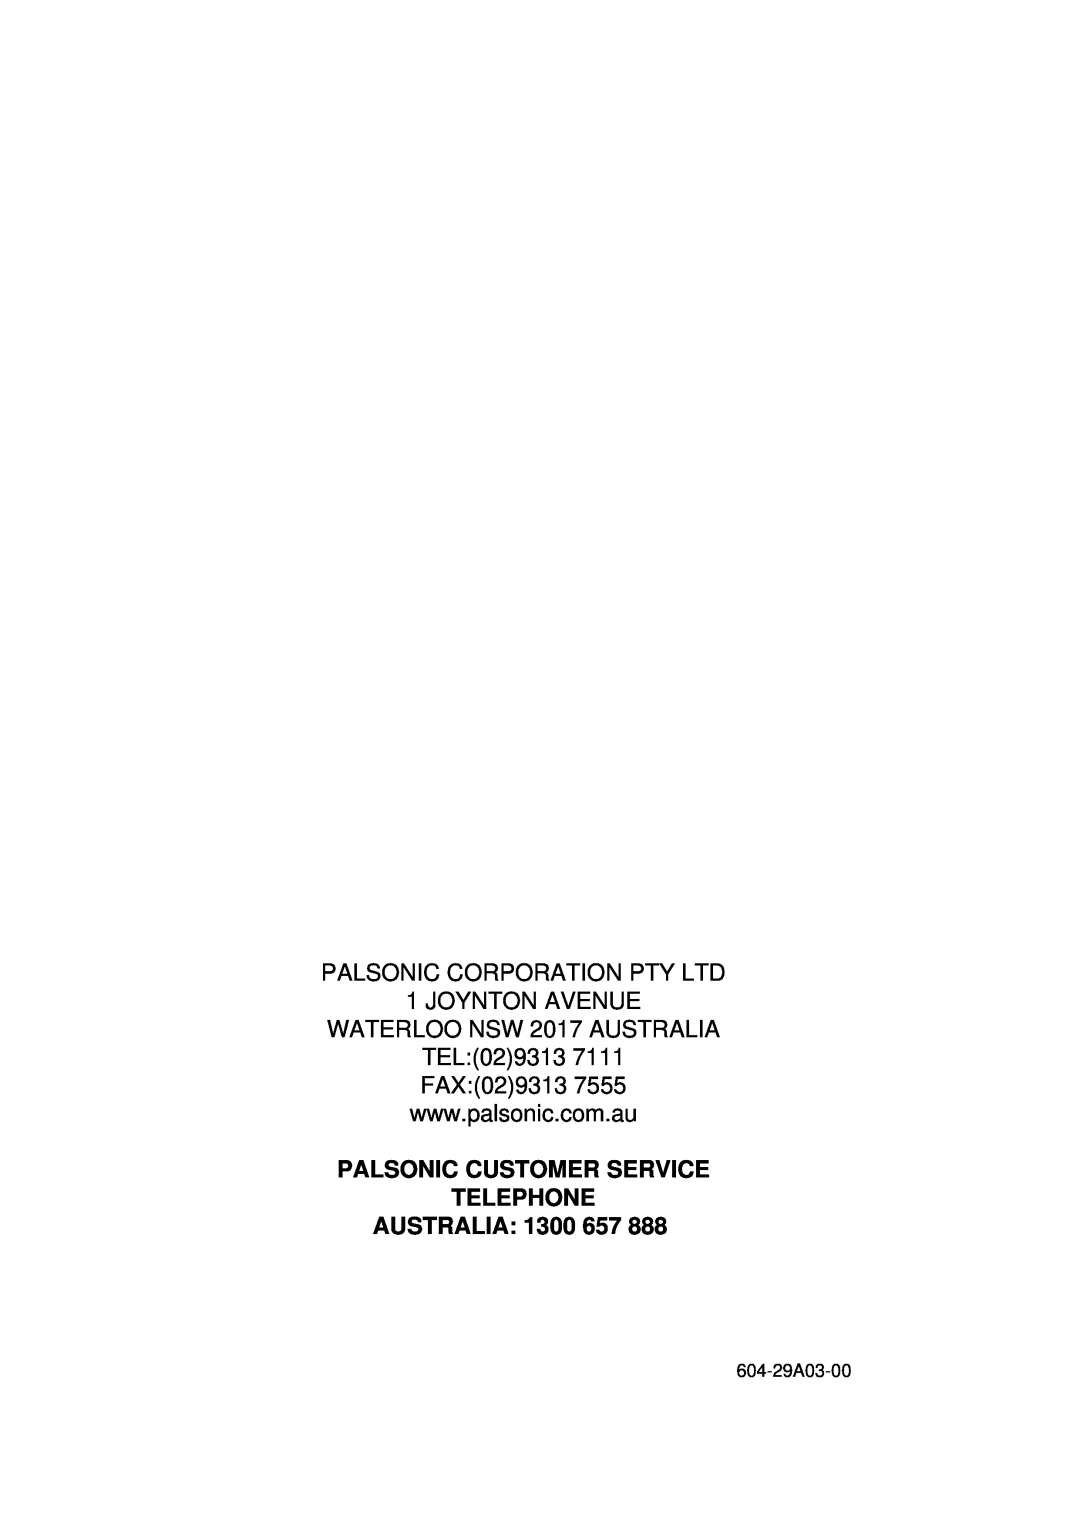 Palsonic 7128 PALSONIC CUSTOMER SERVICE TELEPHONE AUSTRALIA 1300 657, JOYNTON AVENUE WATERLOO NSW 2017 AUSTRALIA TEL029313 